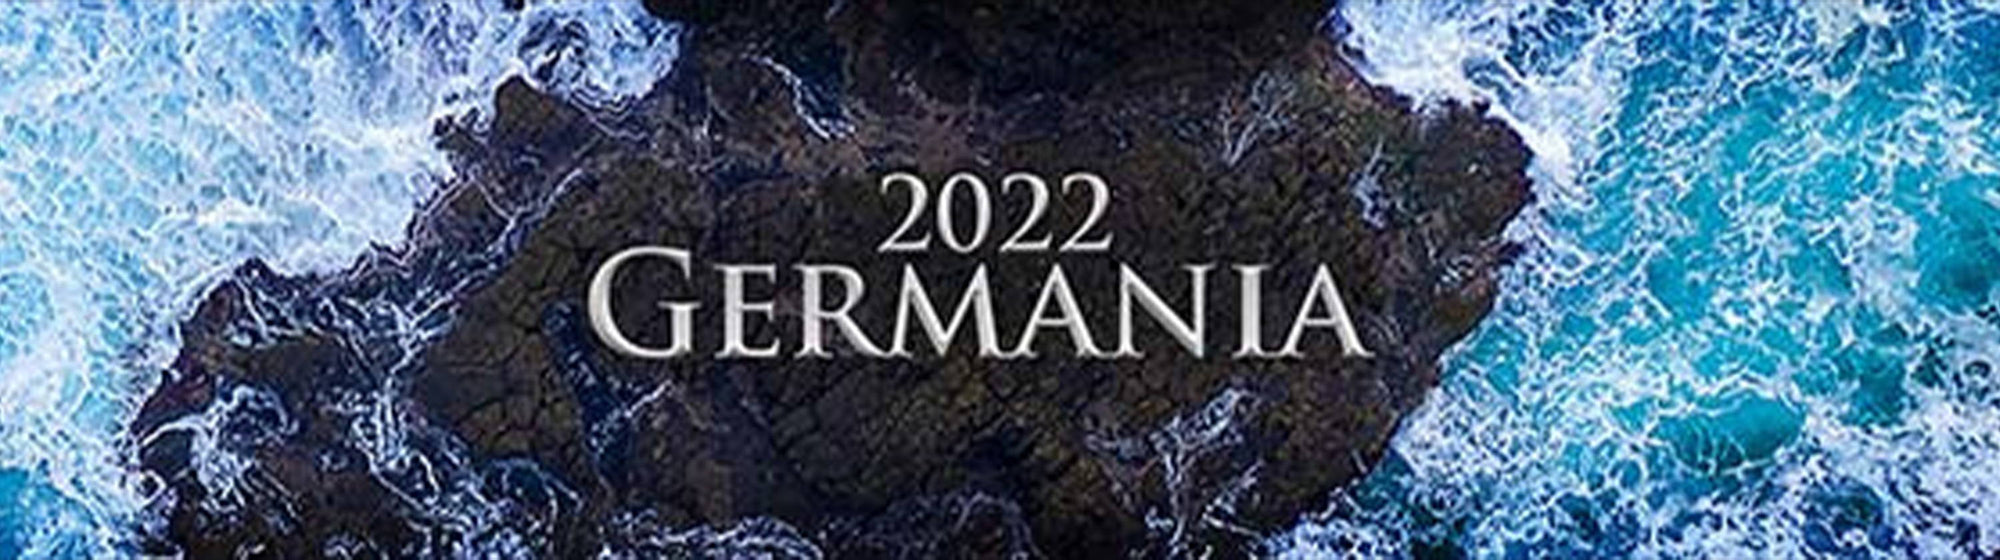 2022 Germanias Preview